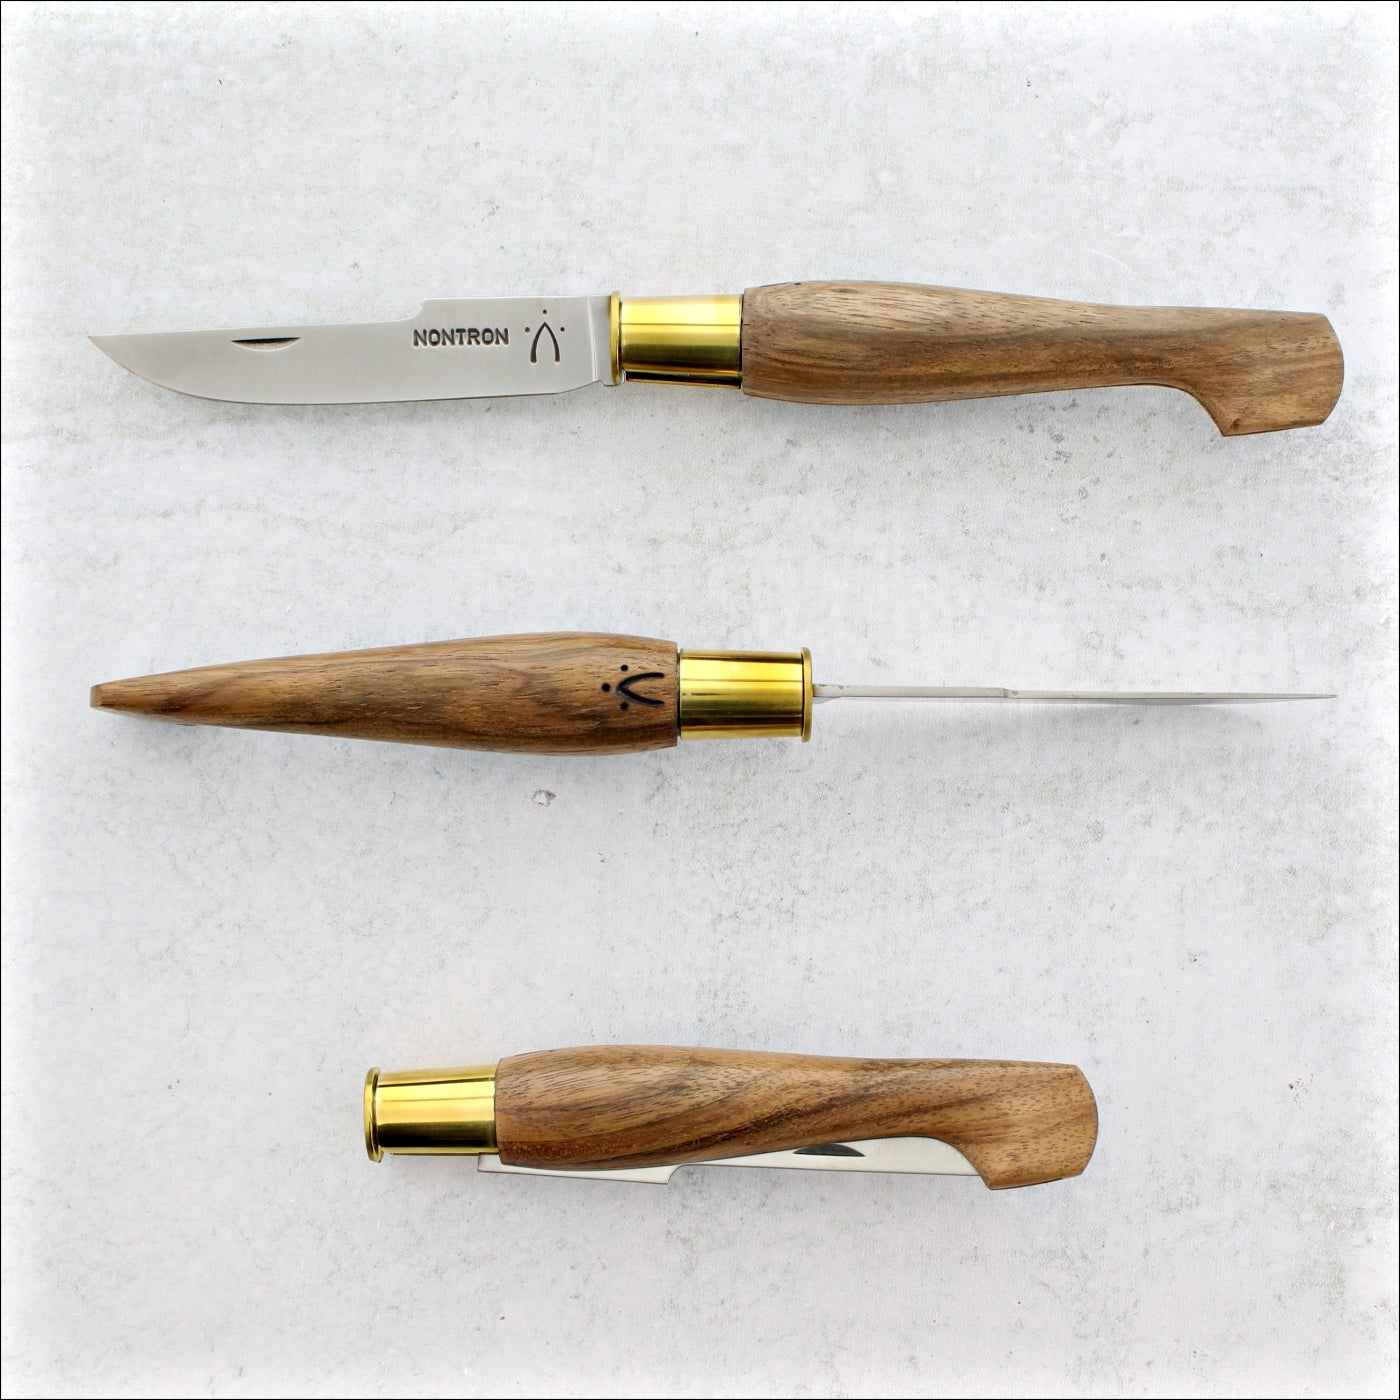 Nontron Pocket Knife No25 - Catalan Blade Walnut